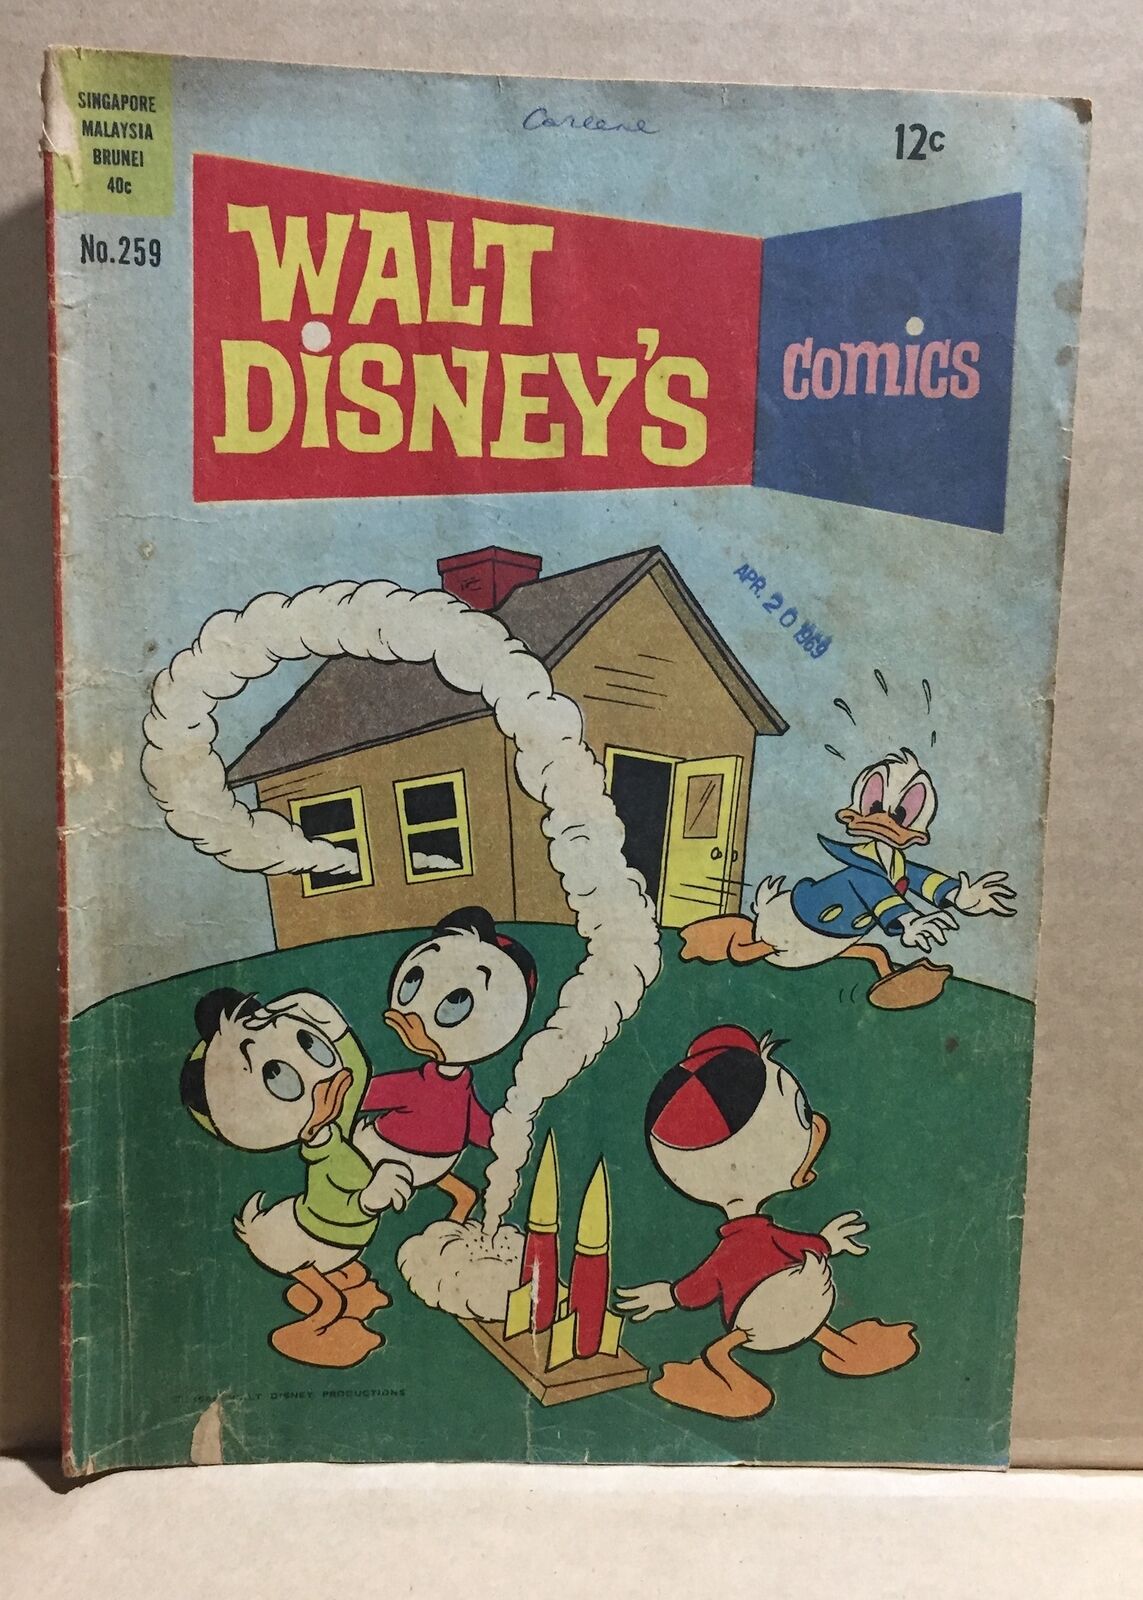 WALT DISNEY COMIC BOOK - DISNEY'S COMIC NO.259  australian